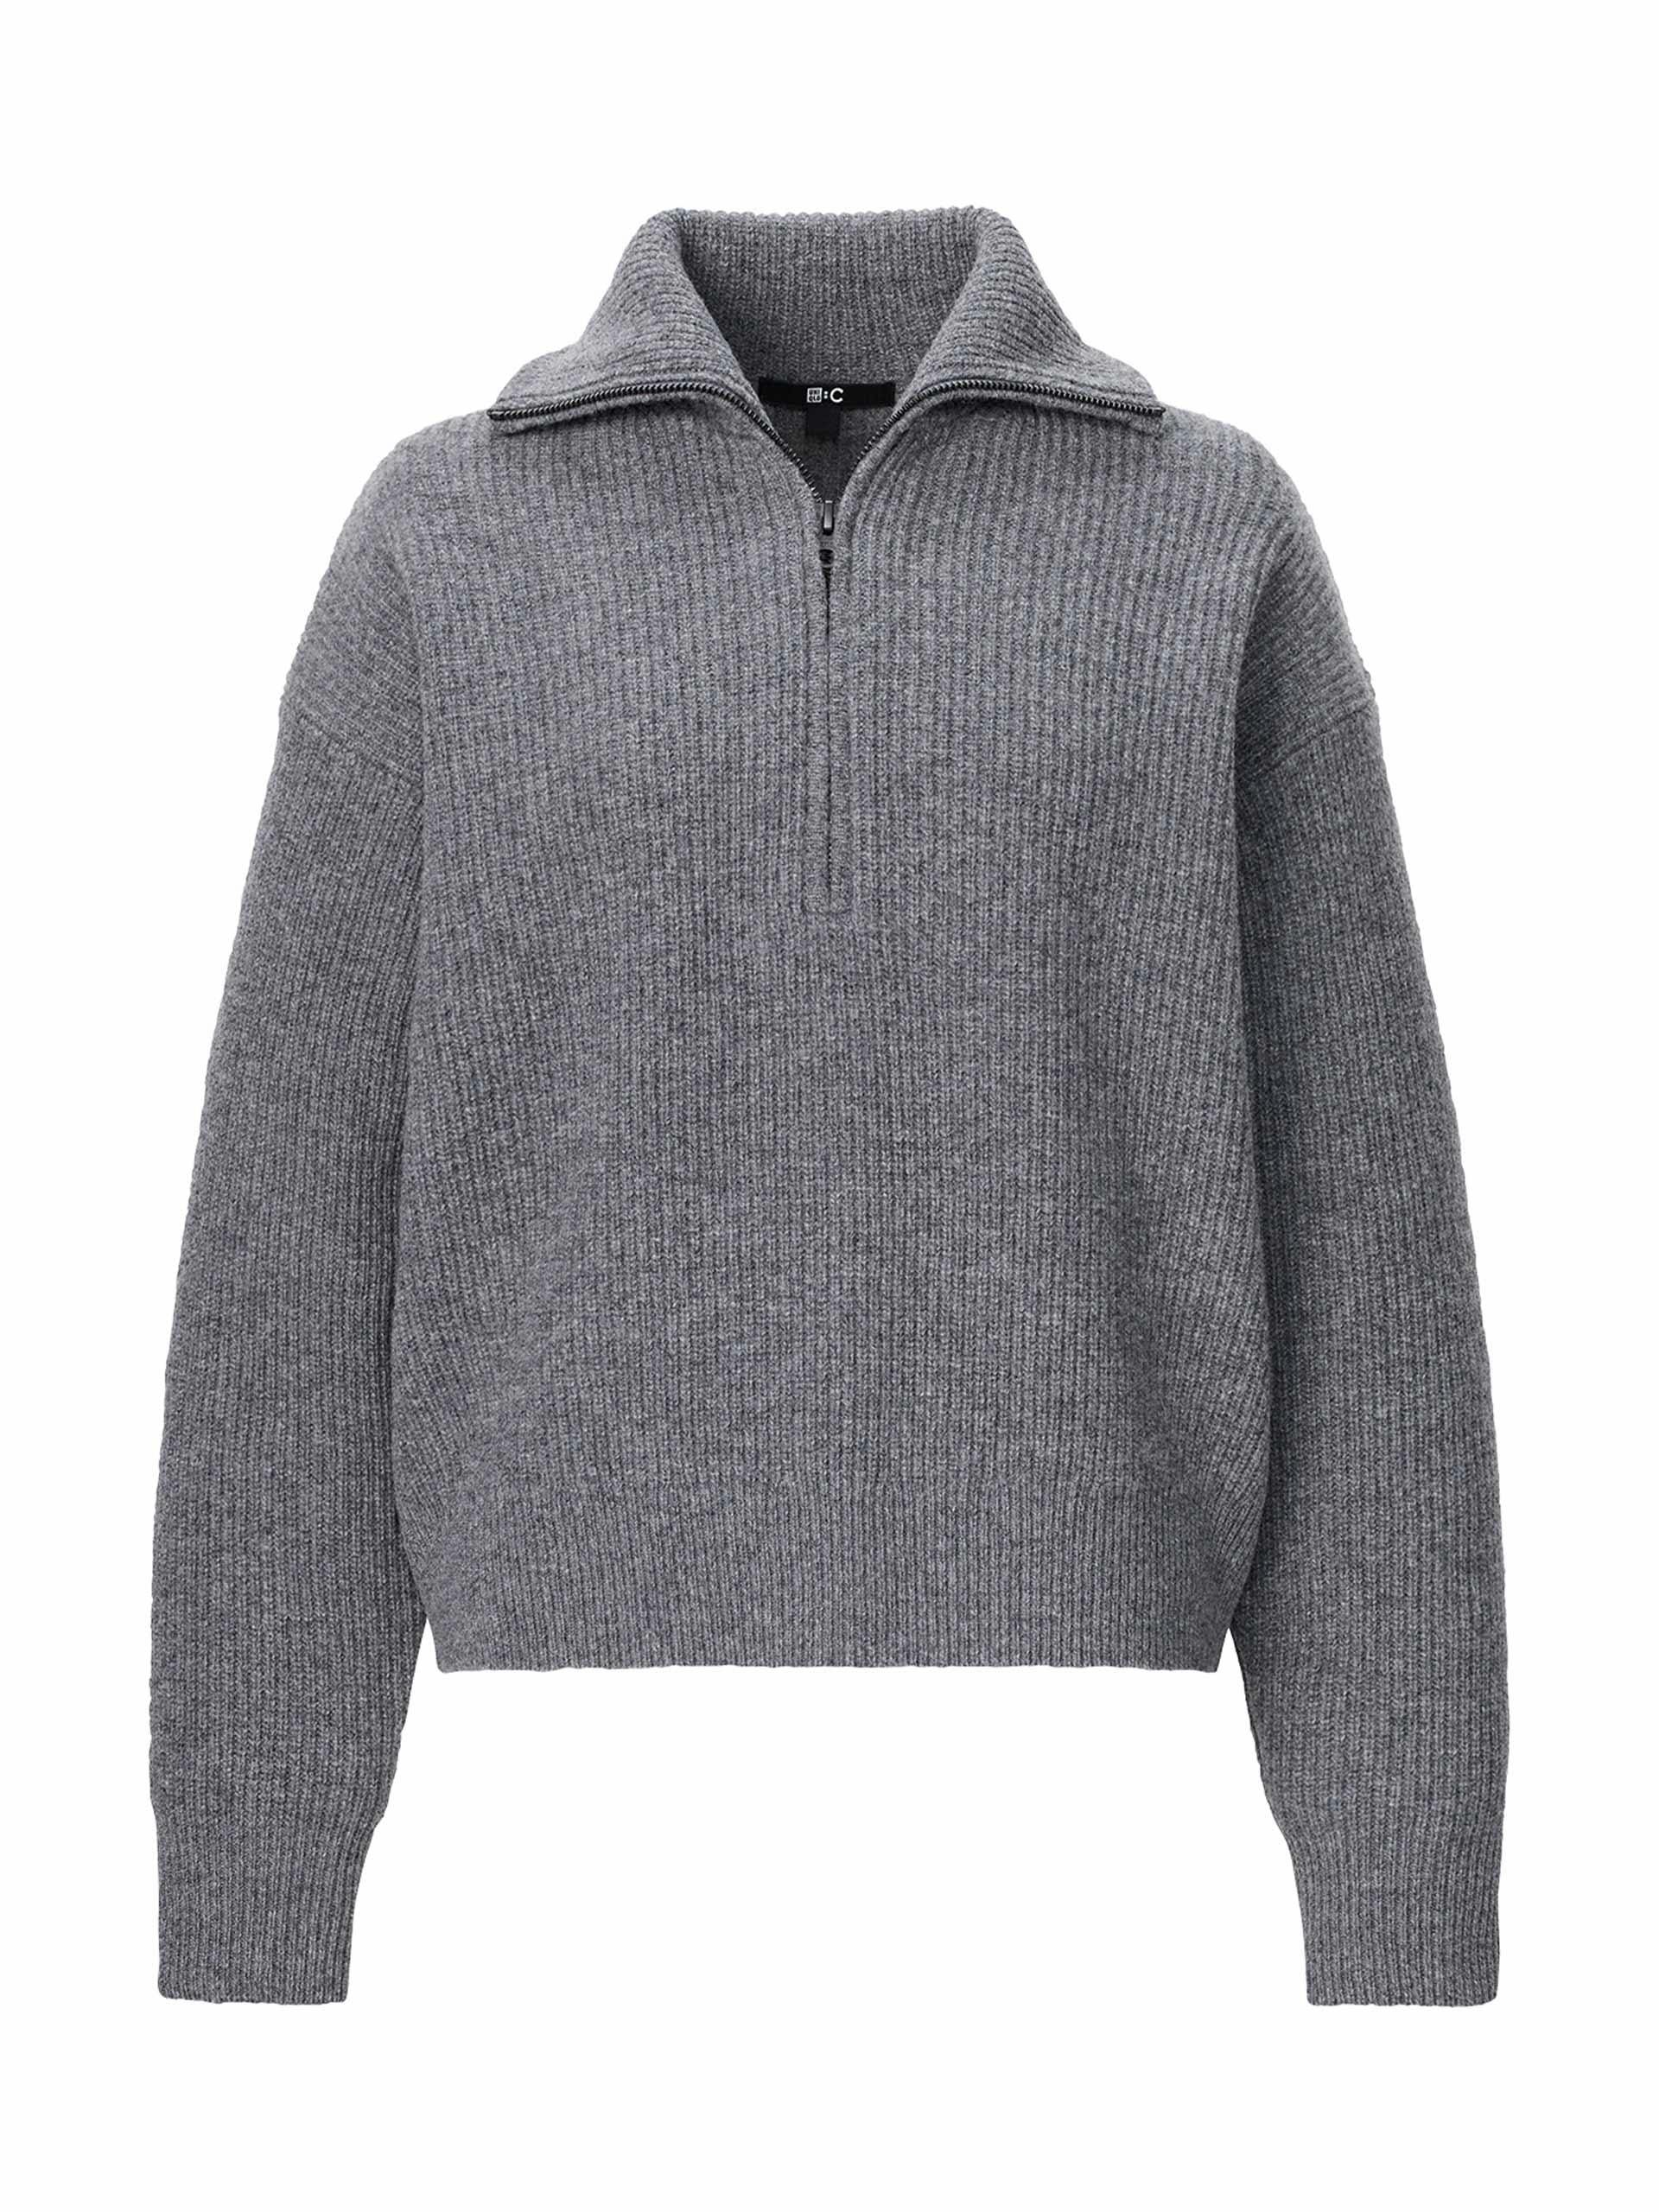 Grey half-zipped jumper